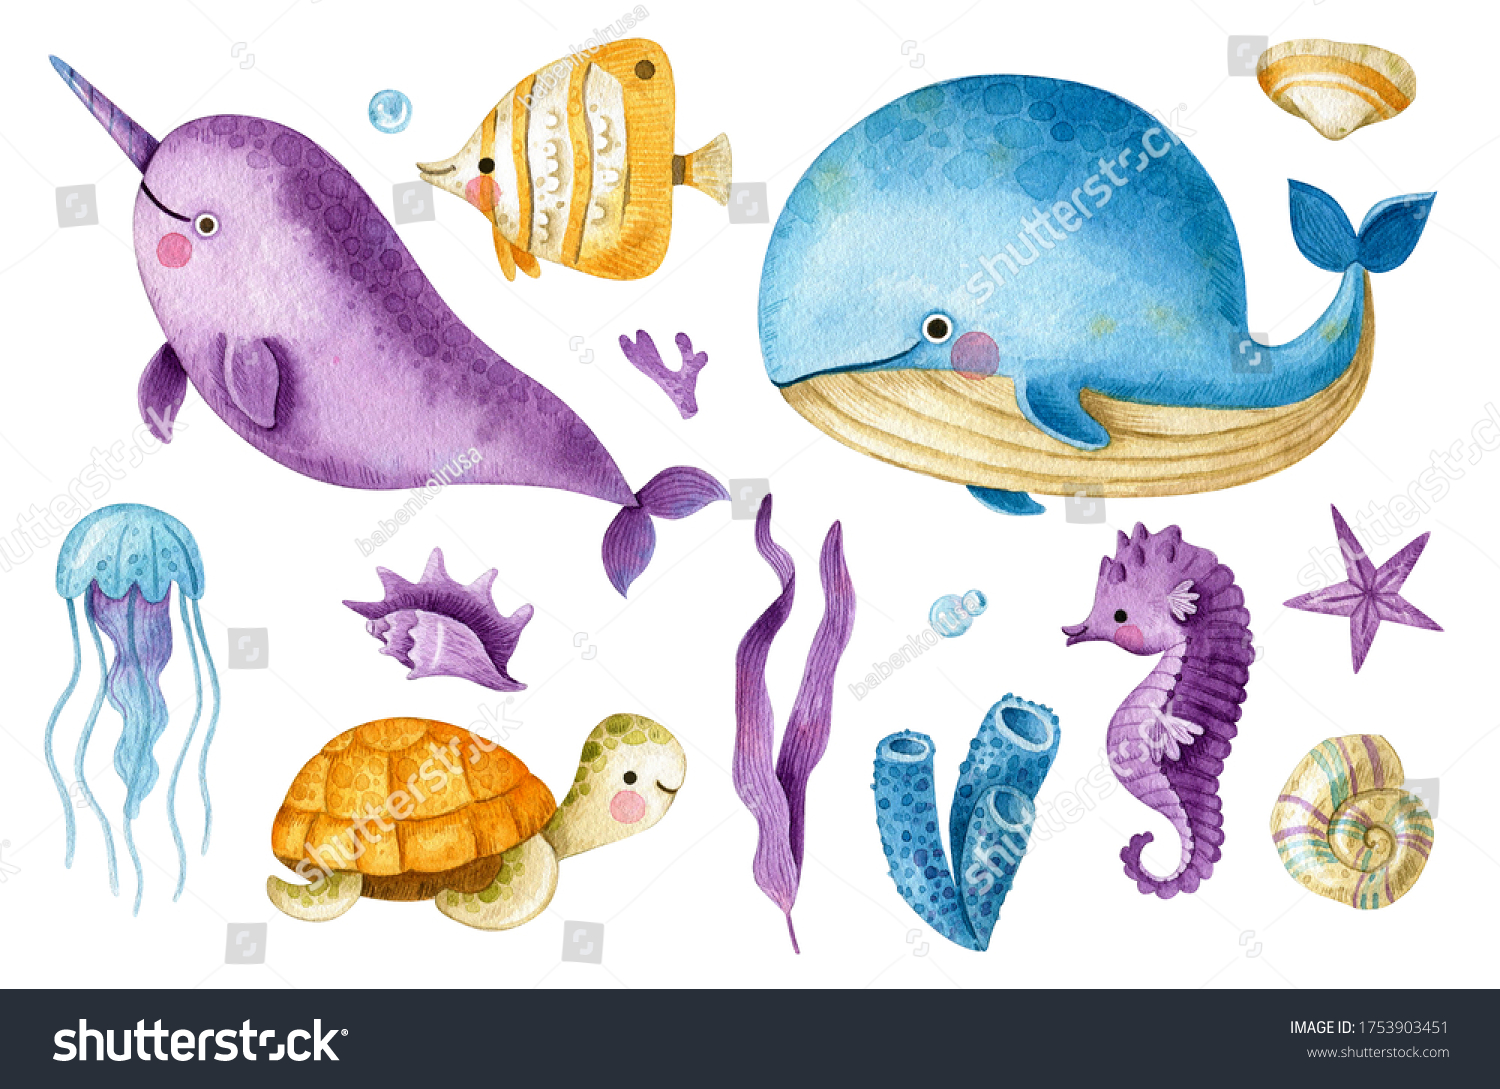 19,849 Cute seahorse Images, Stock Photos & Vectors | Shutterstock